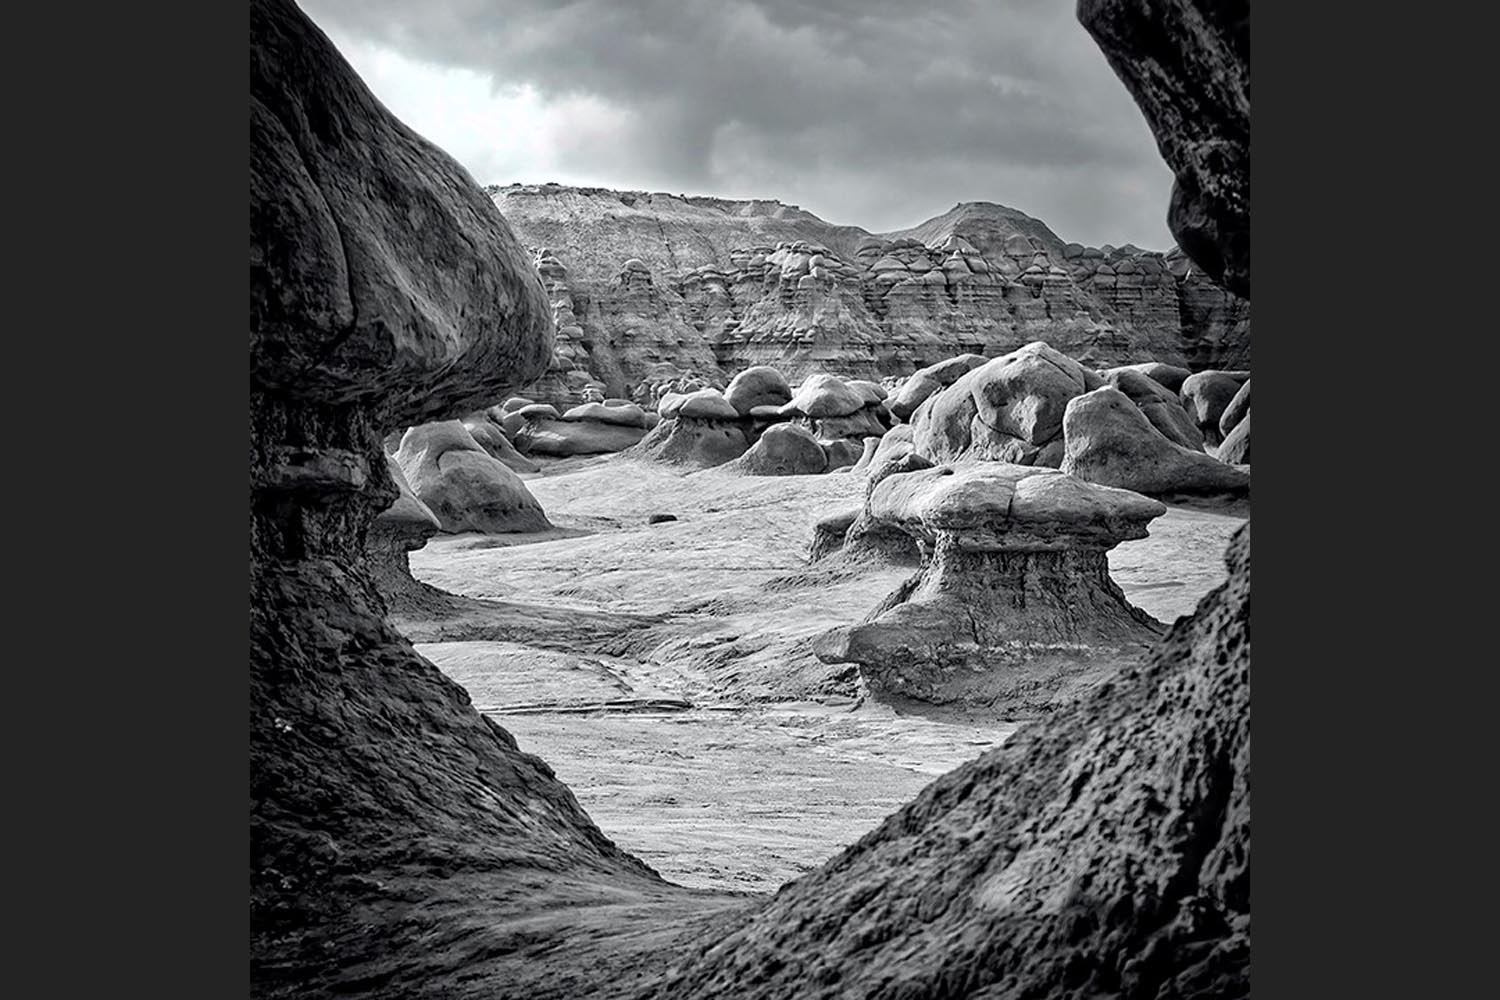 Carol Lyon: Martianscape - Goblin Valley, Utah